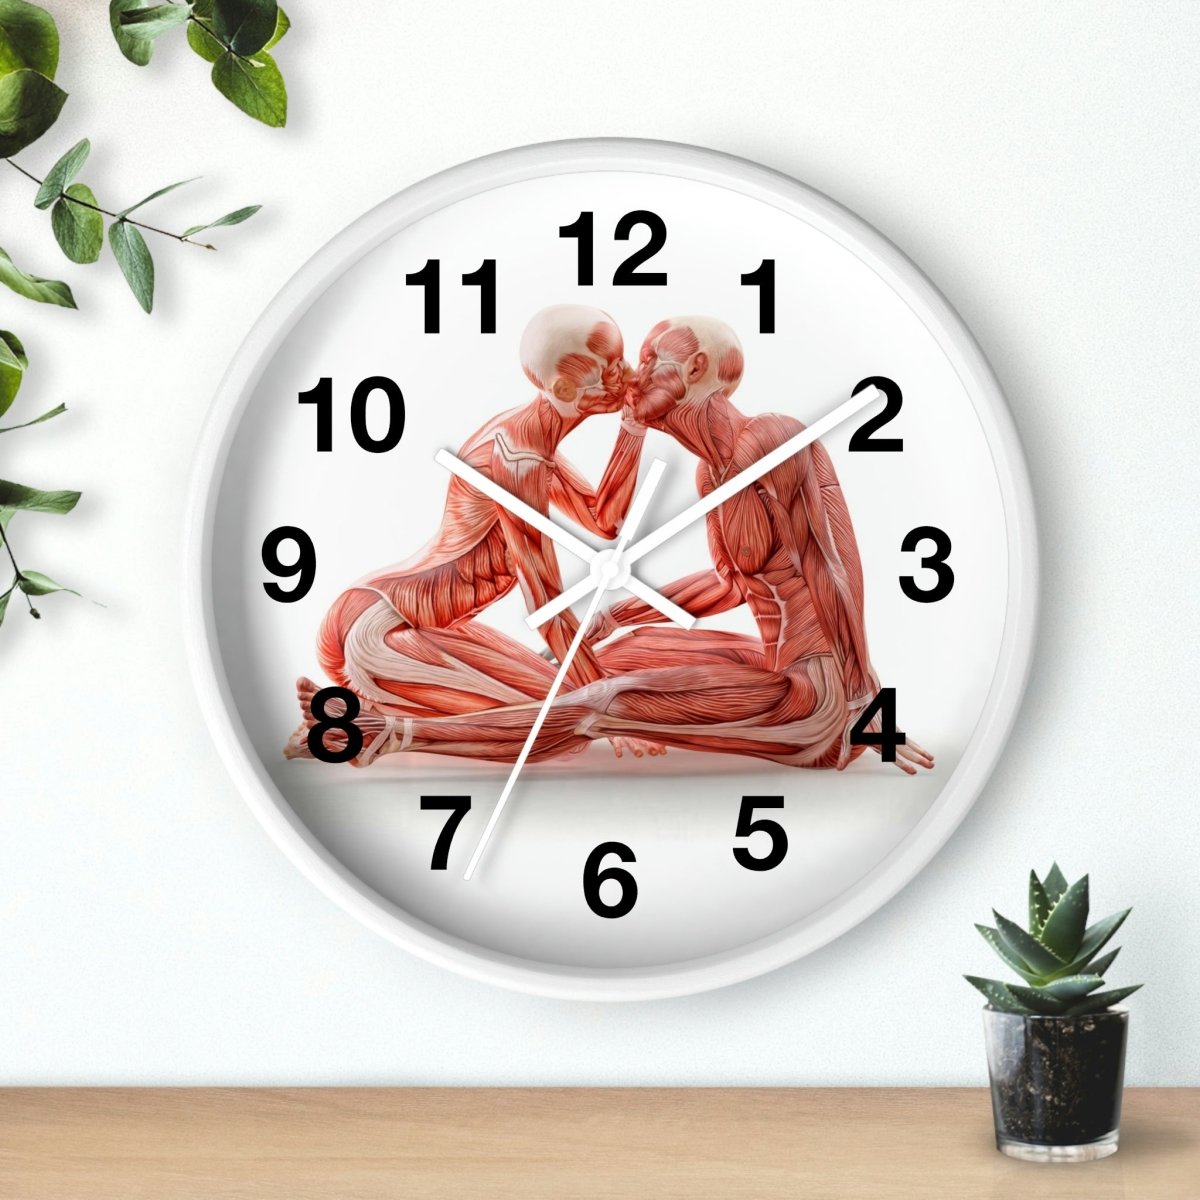 Anatomical Romance Wall Clock - Medical Clock Design Home Decor Medical Arts Shop